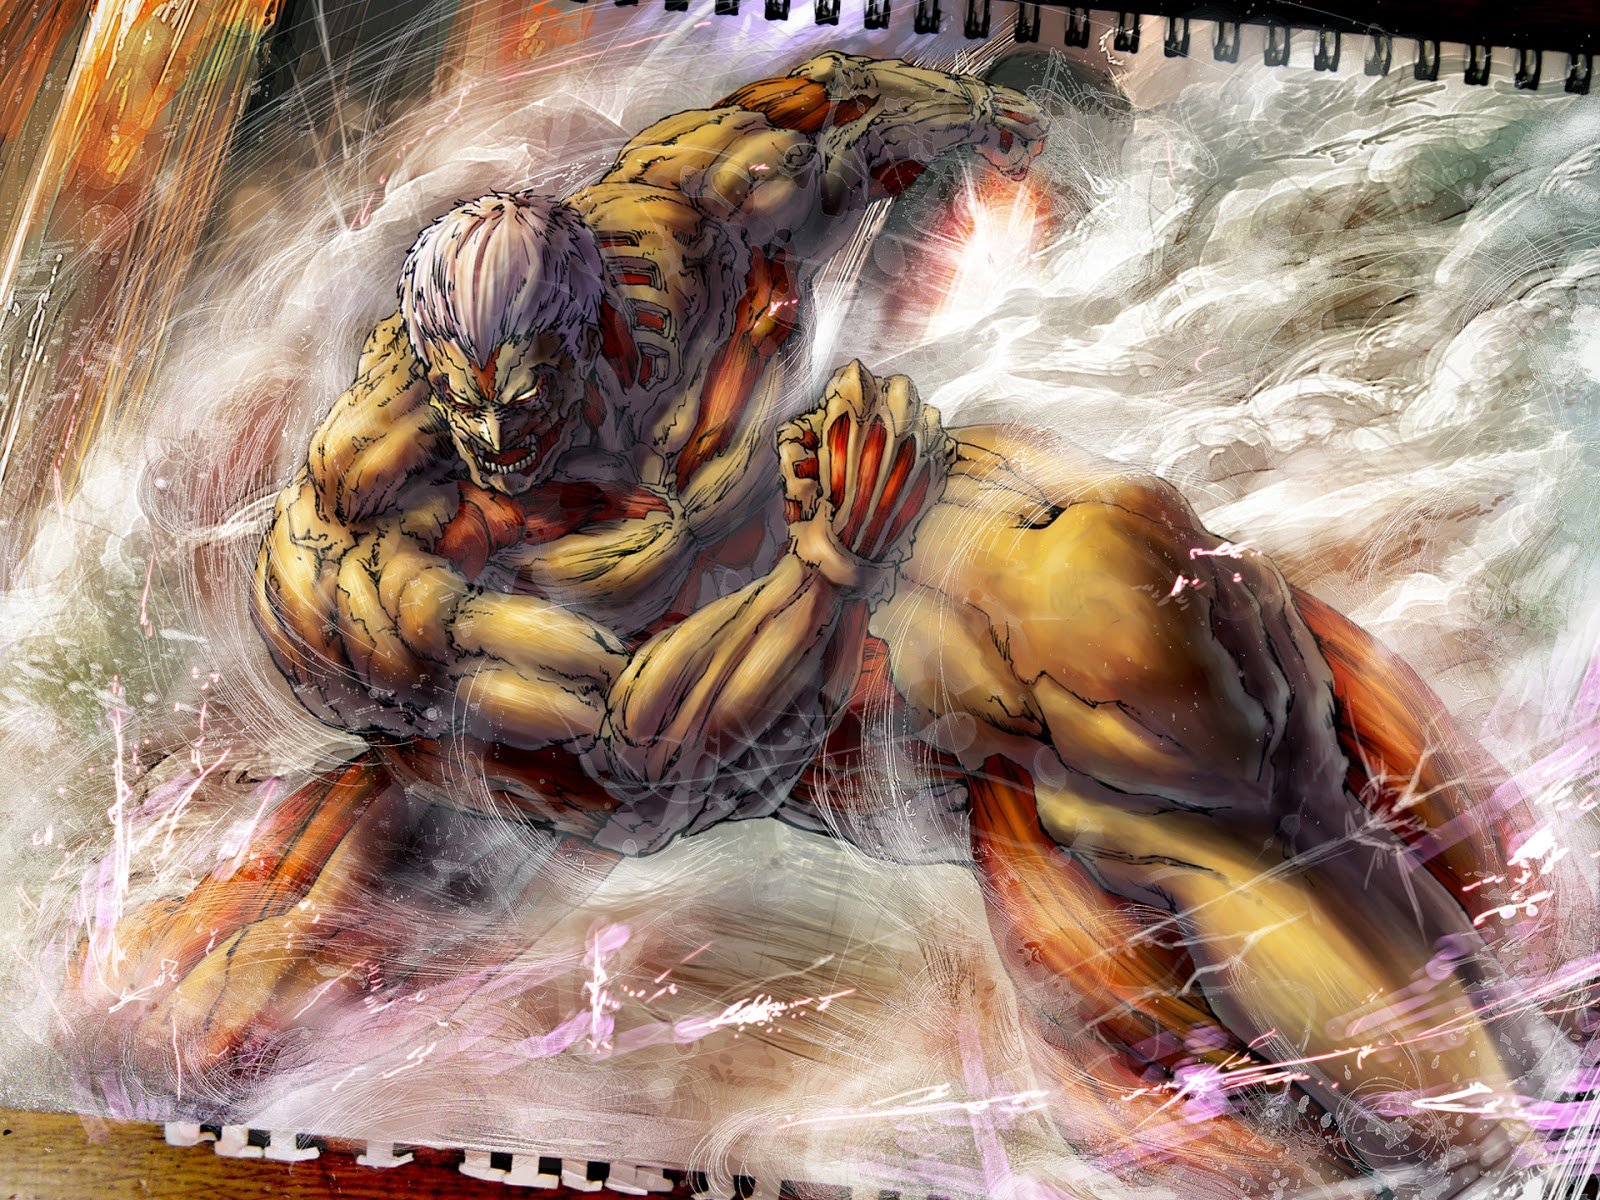  Attack on Titan Shingeki no Kyojin Anime HD Background Wallpaper Photo